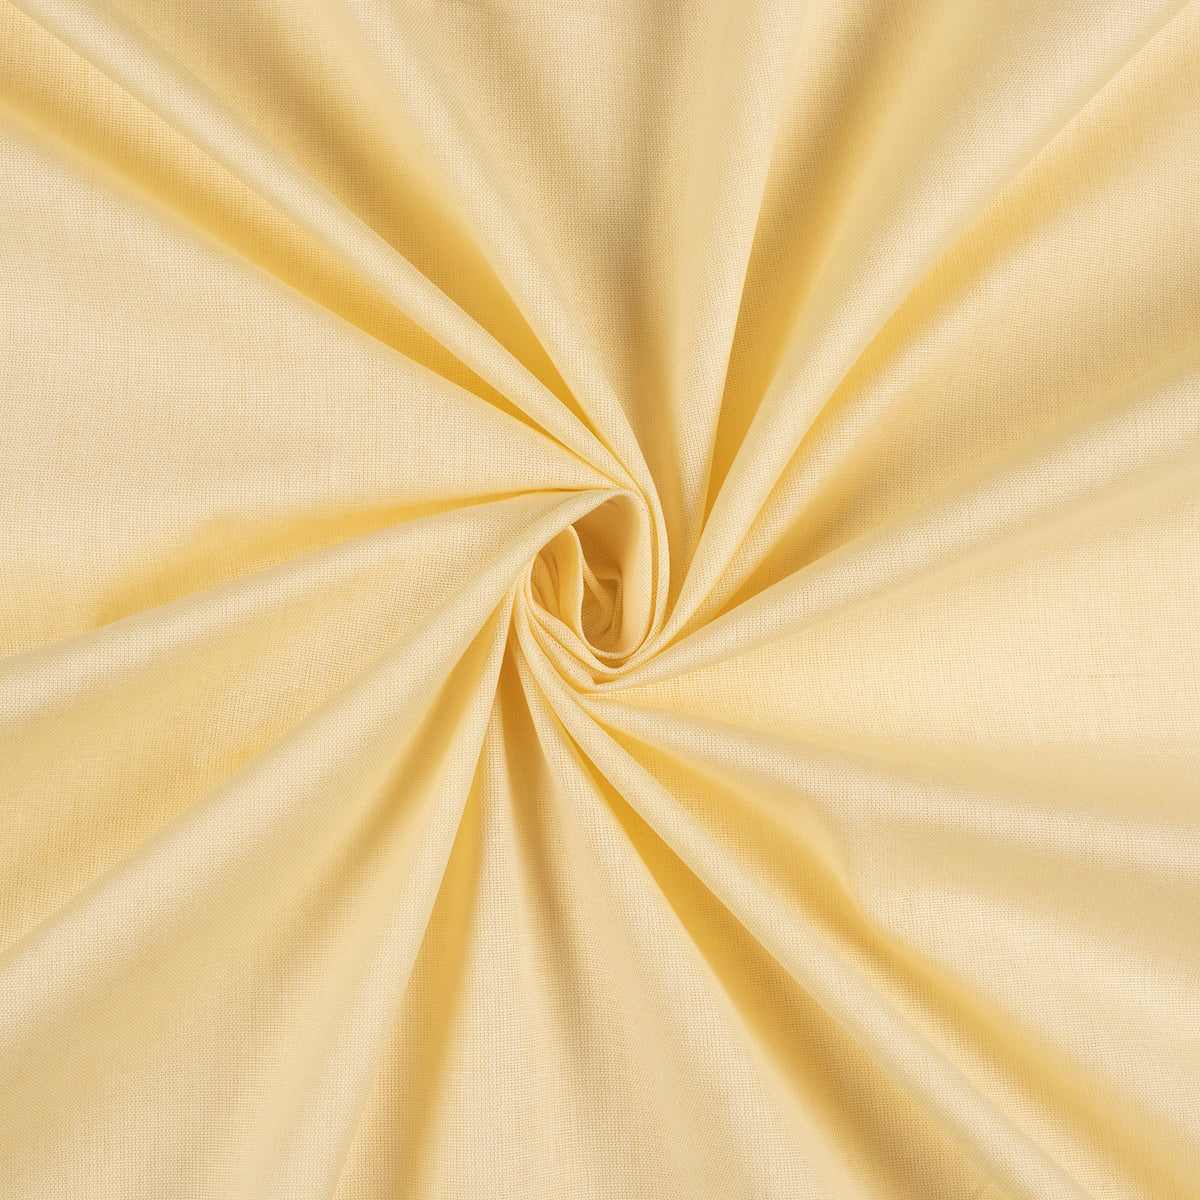 Dffoddil Yellow Plain Cotton Flex Fabric